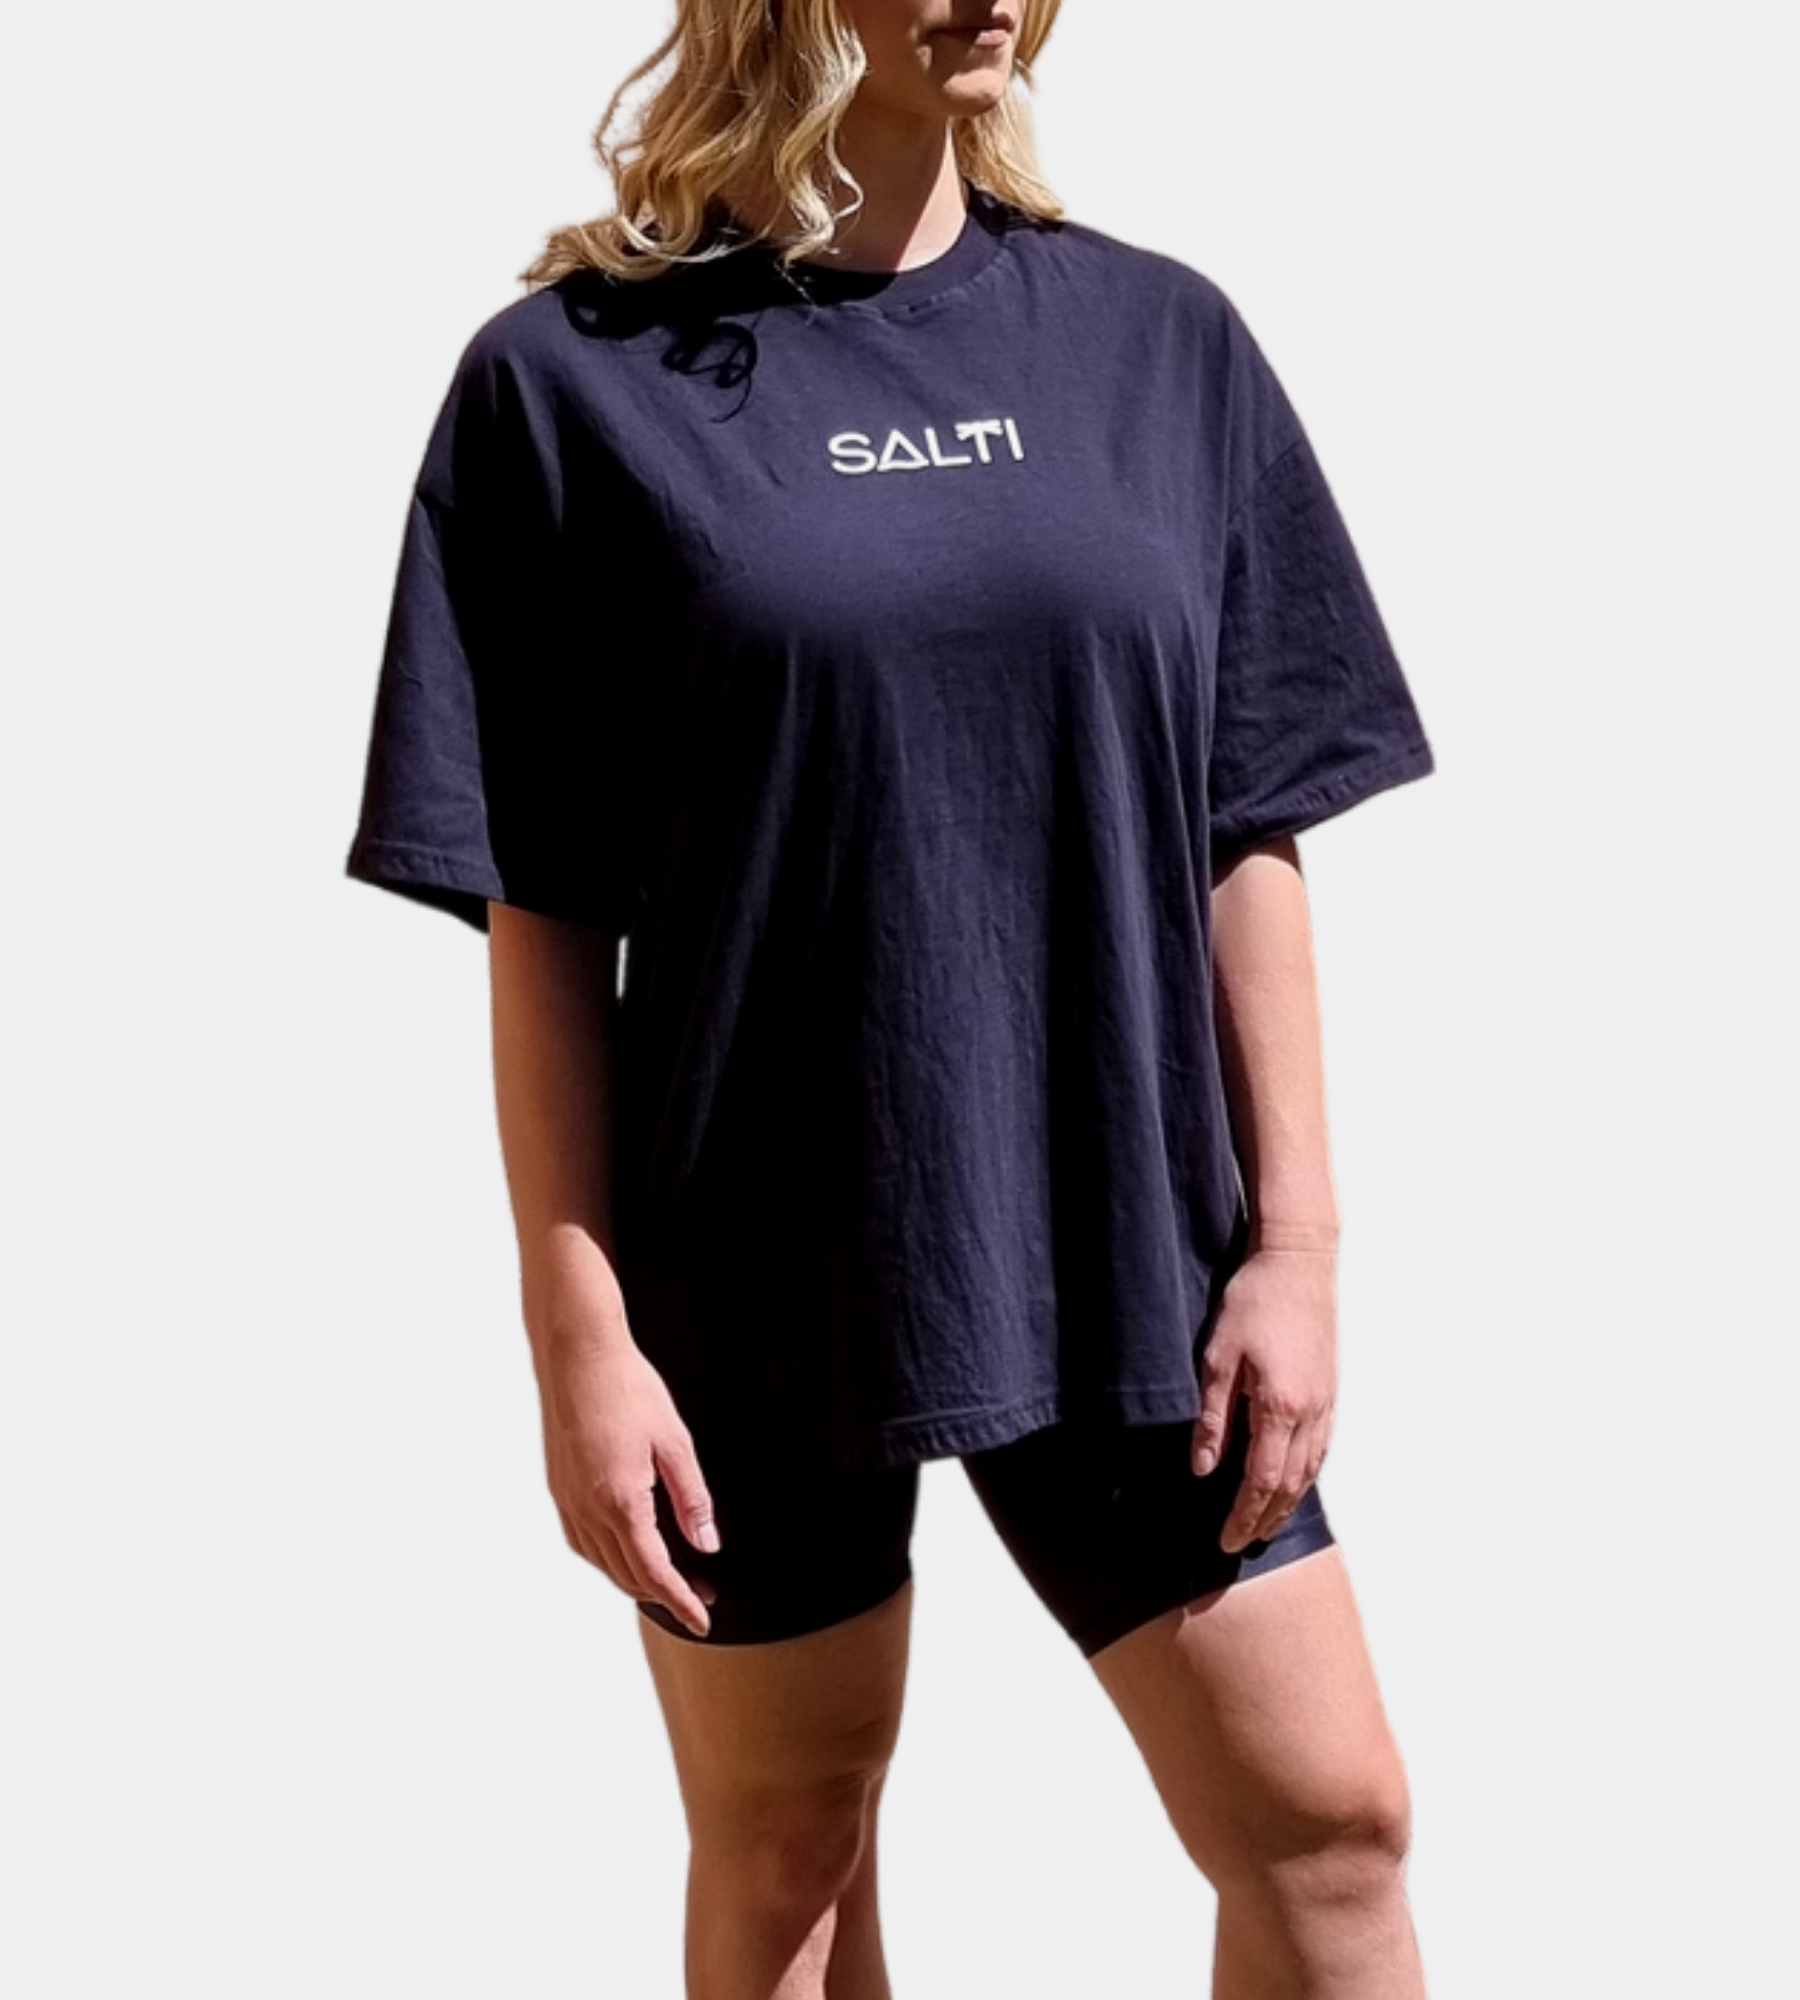 Women's basic Salti tee: black